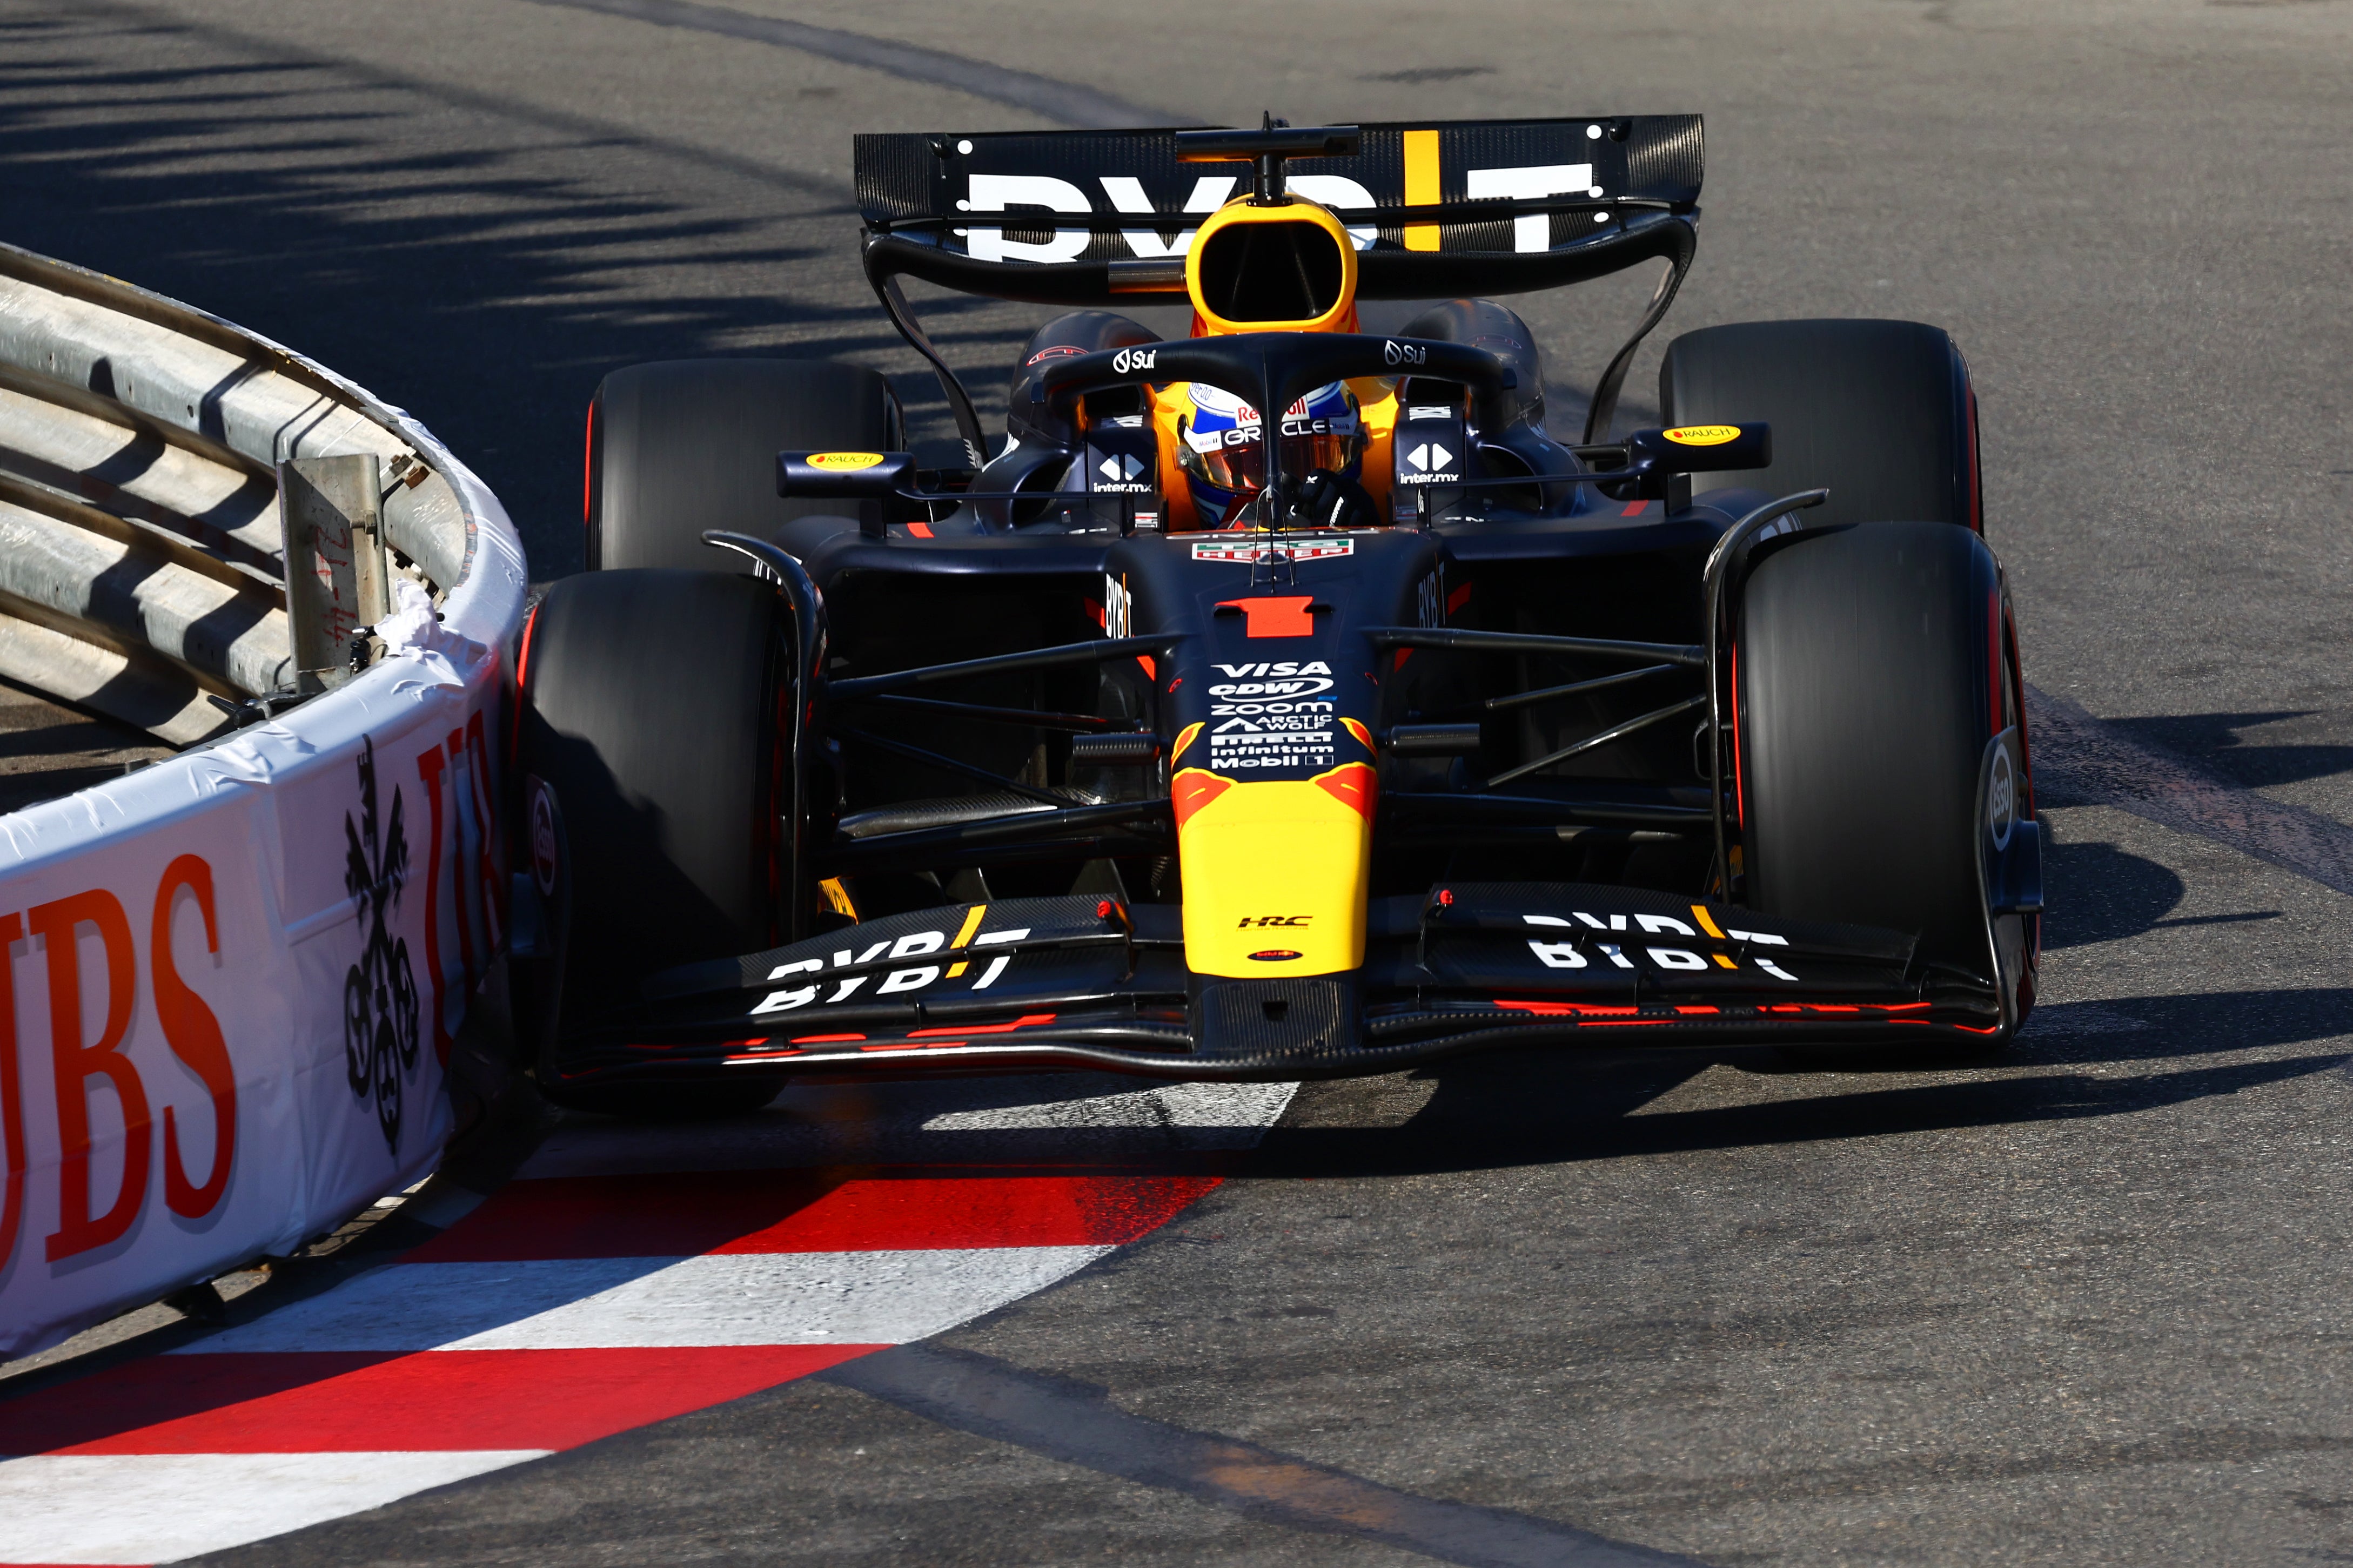 Max Verstappen will start Sunday’s race sixth on the grid